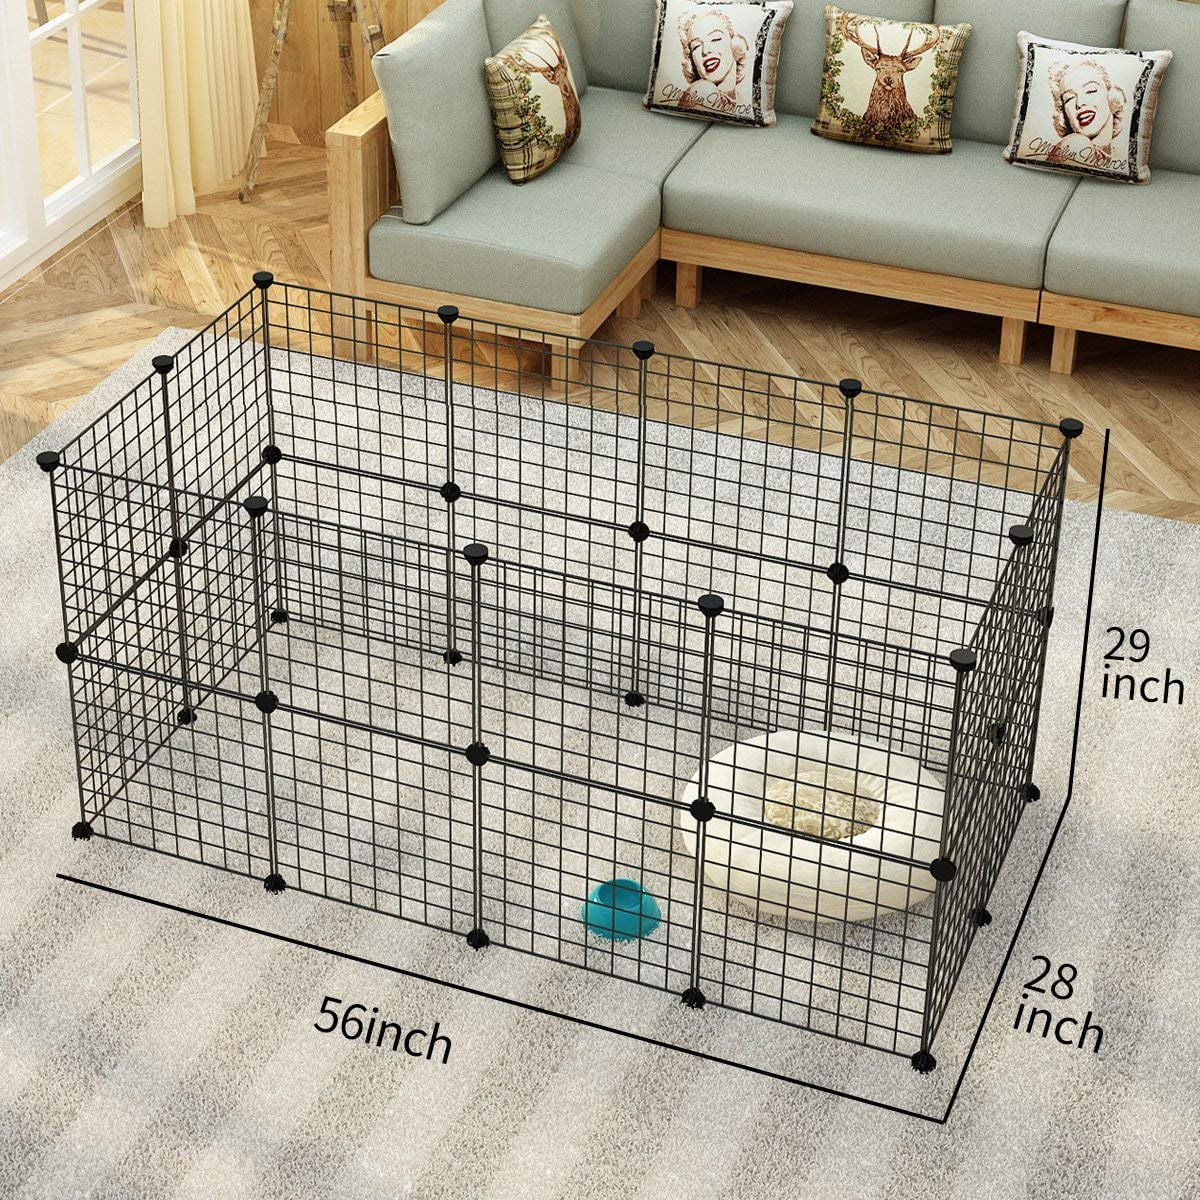 Veryke Pet Playpen, Small Animal Cage, Indoor Portable Metal Wire Yard Fence